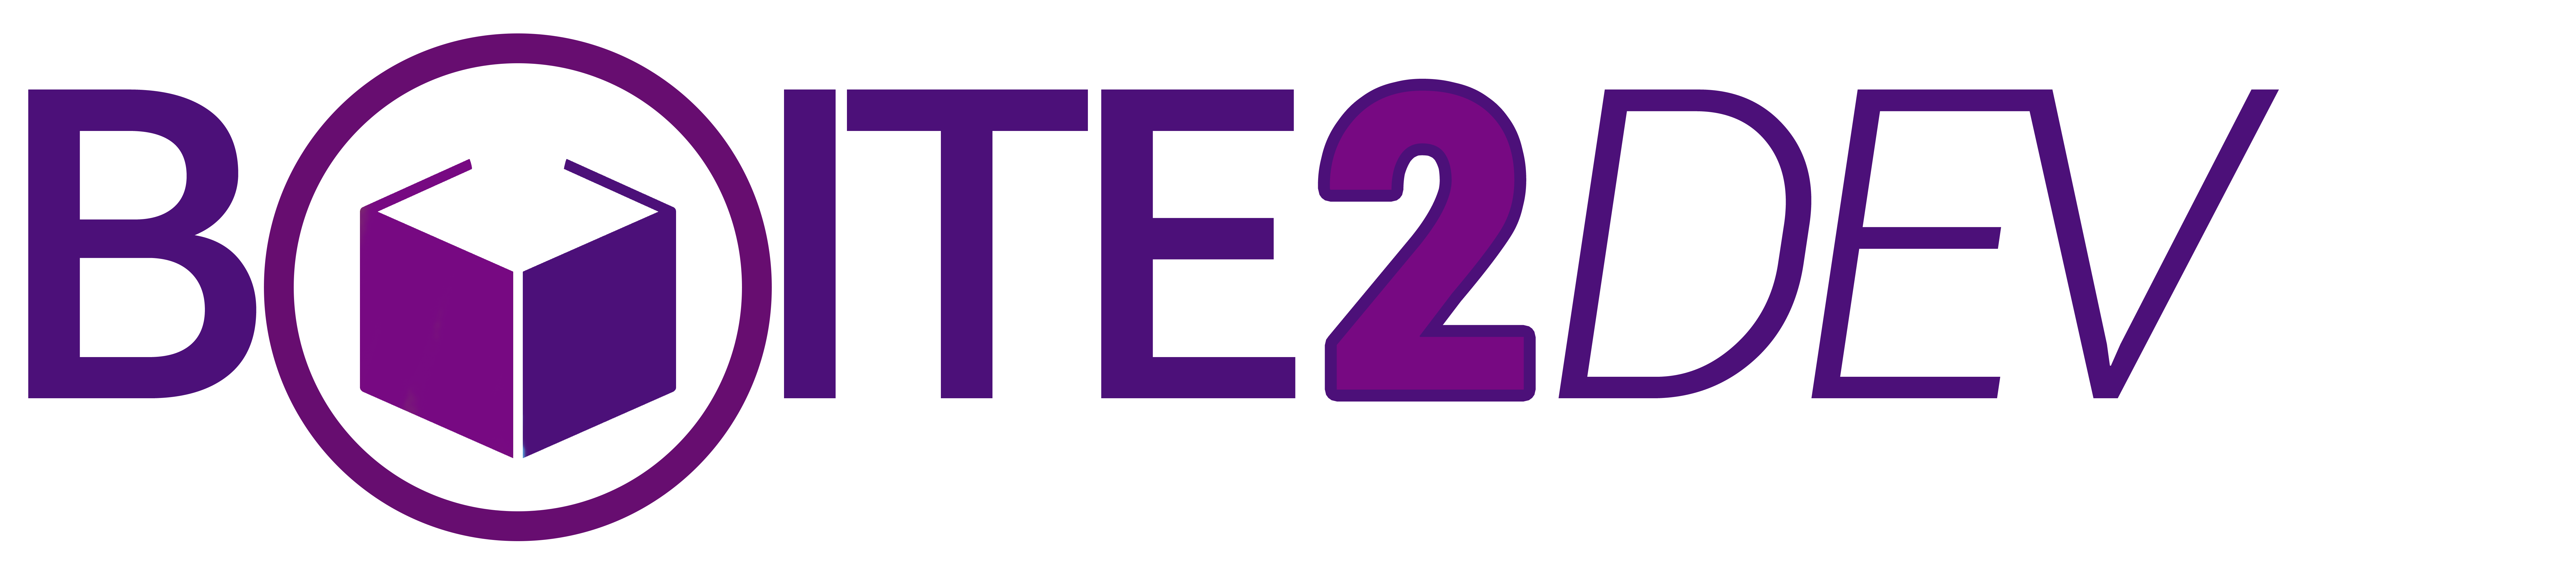 Logo de Boite2dev